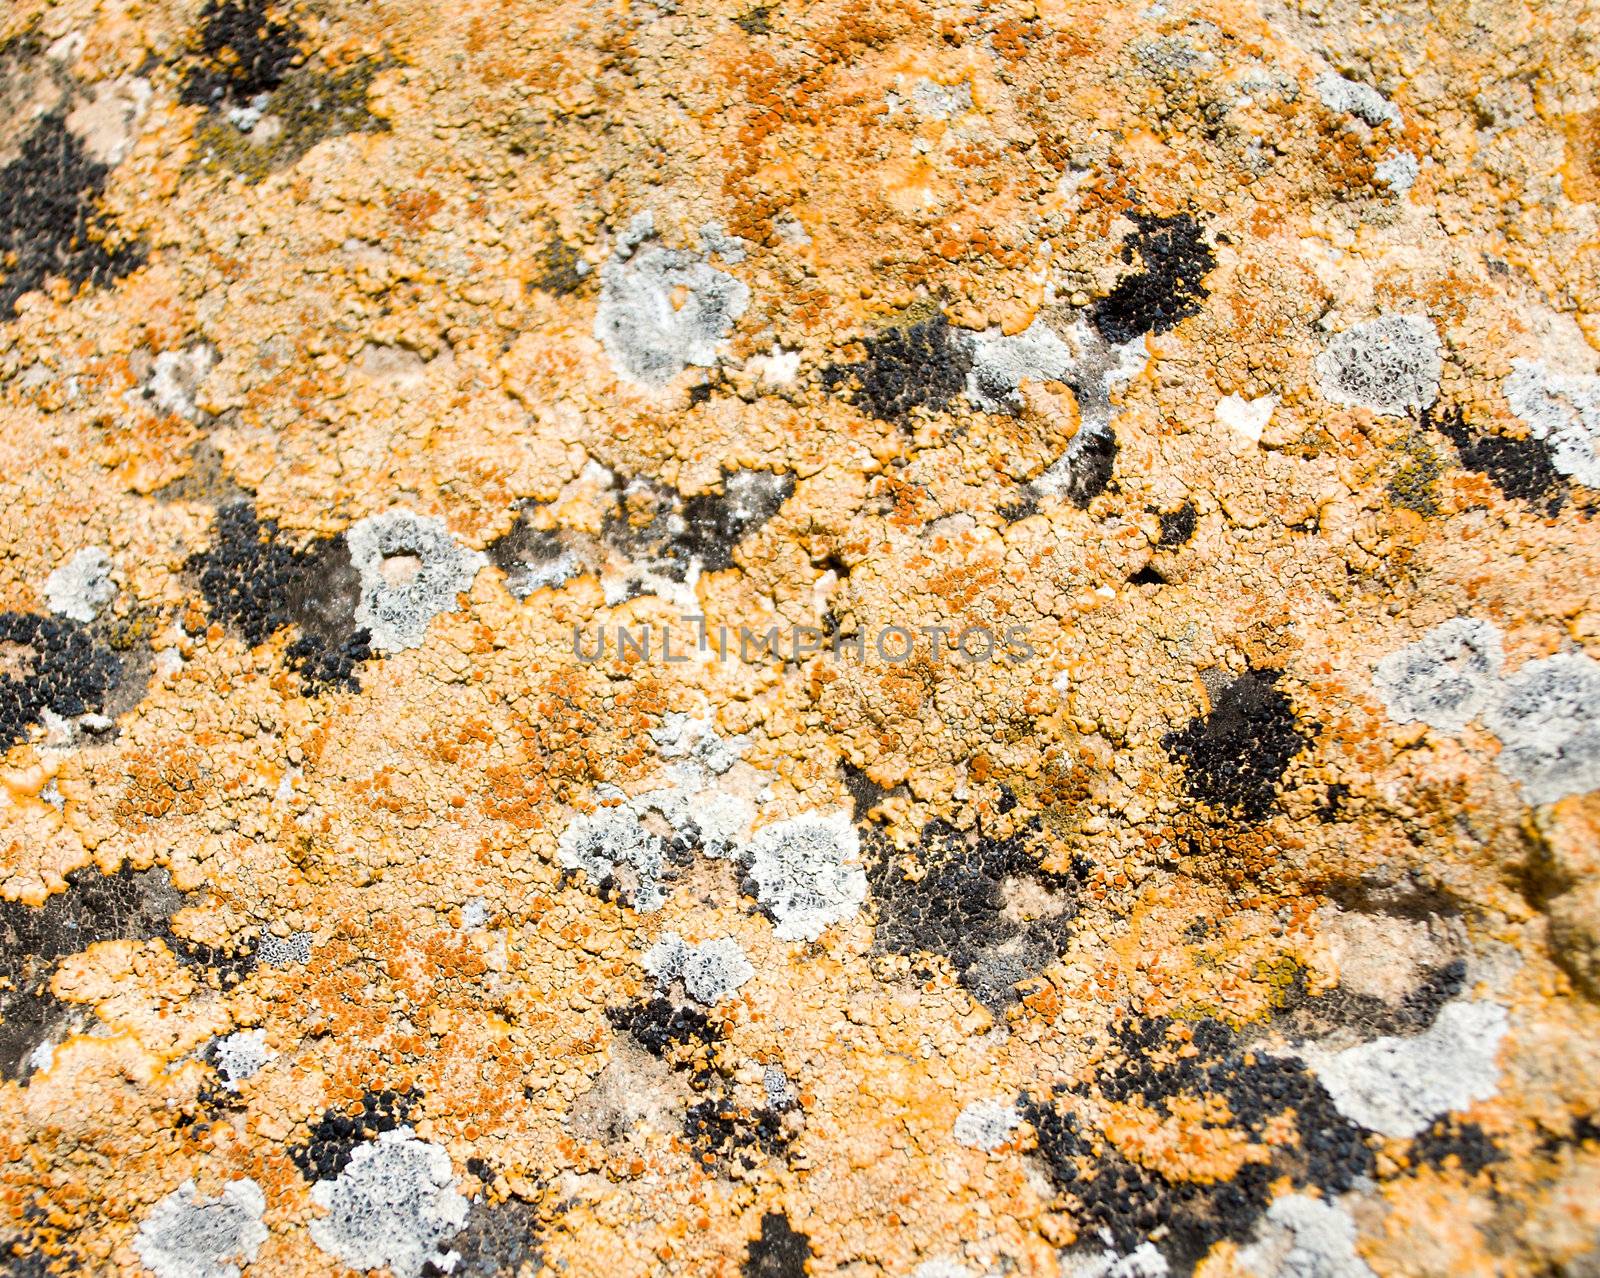 Closeup view of natural orange mold